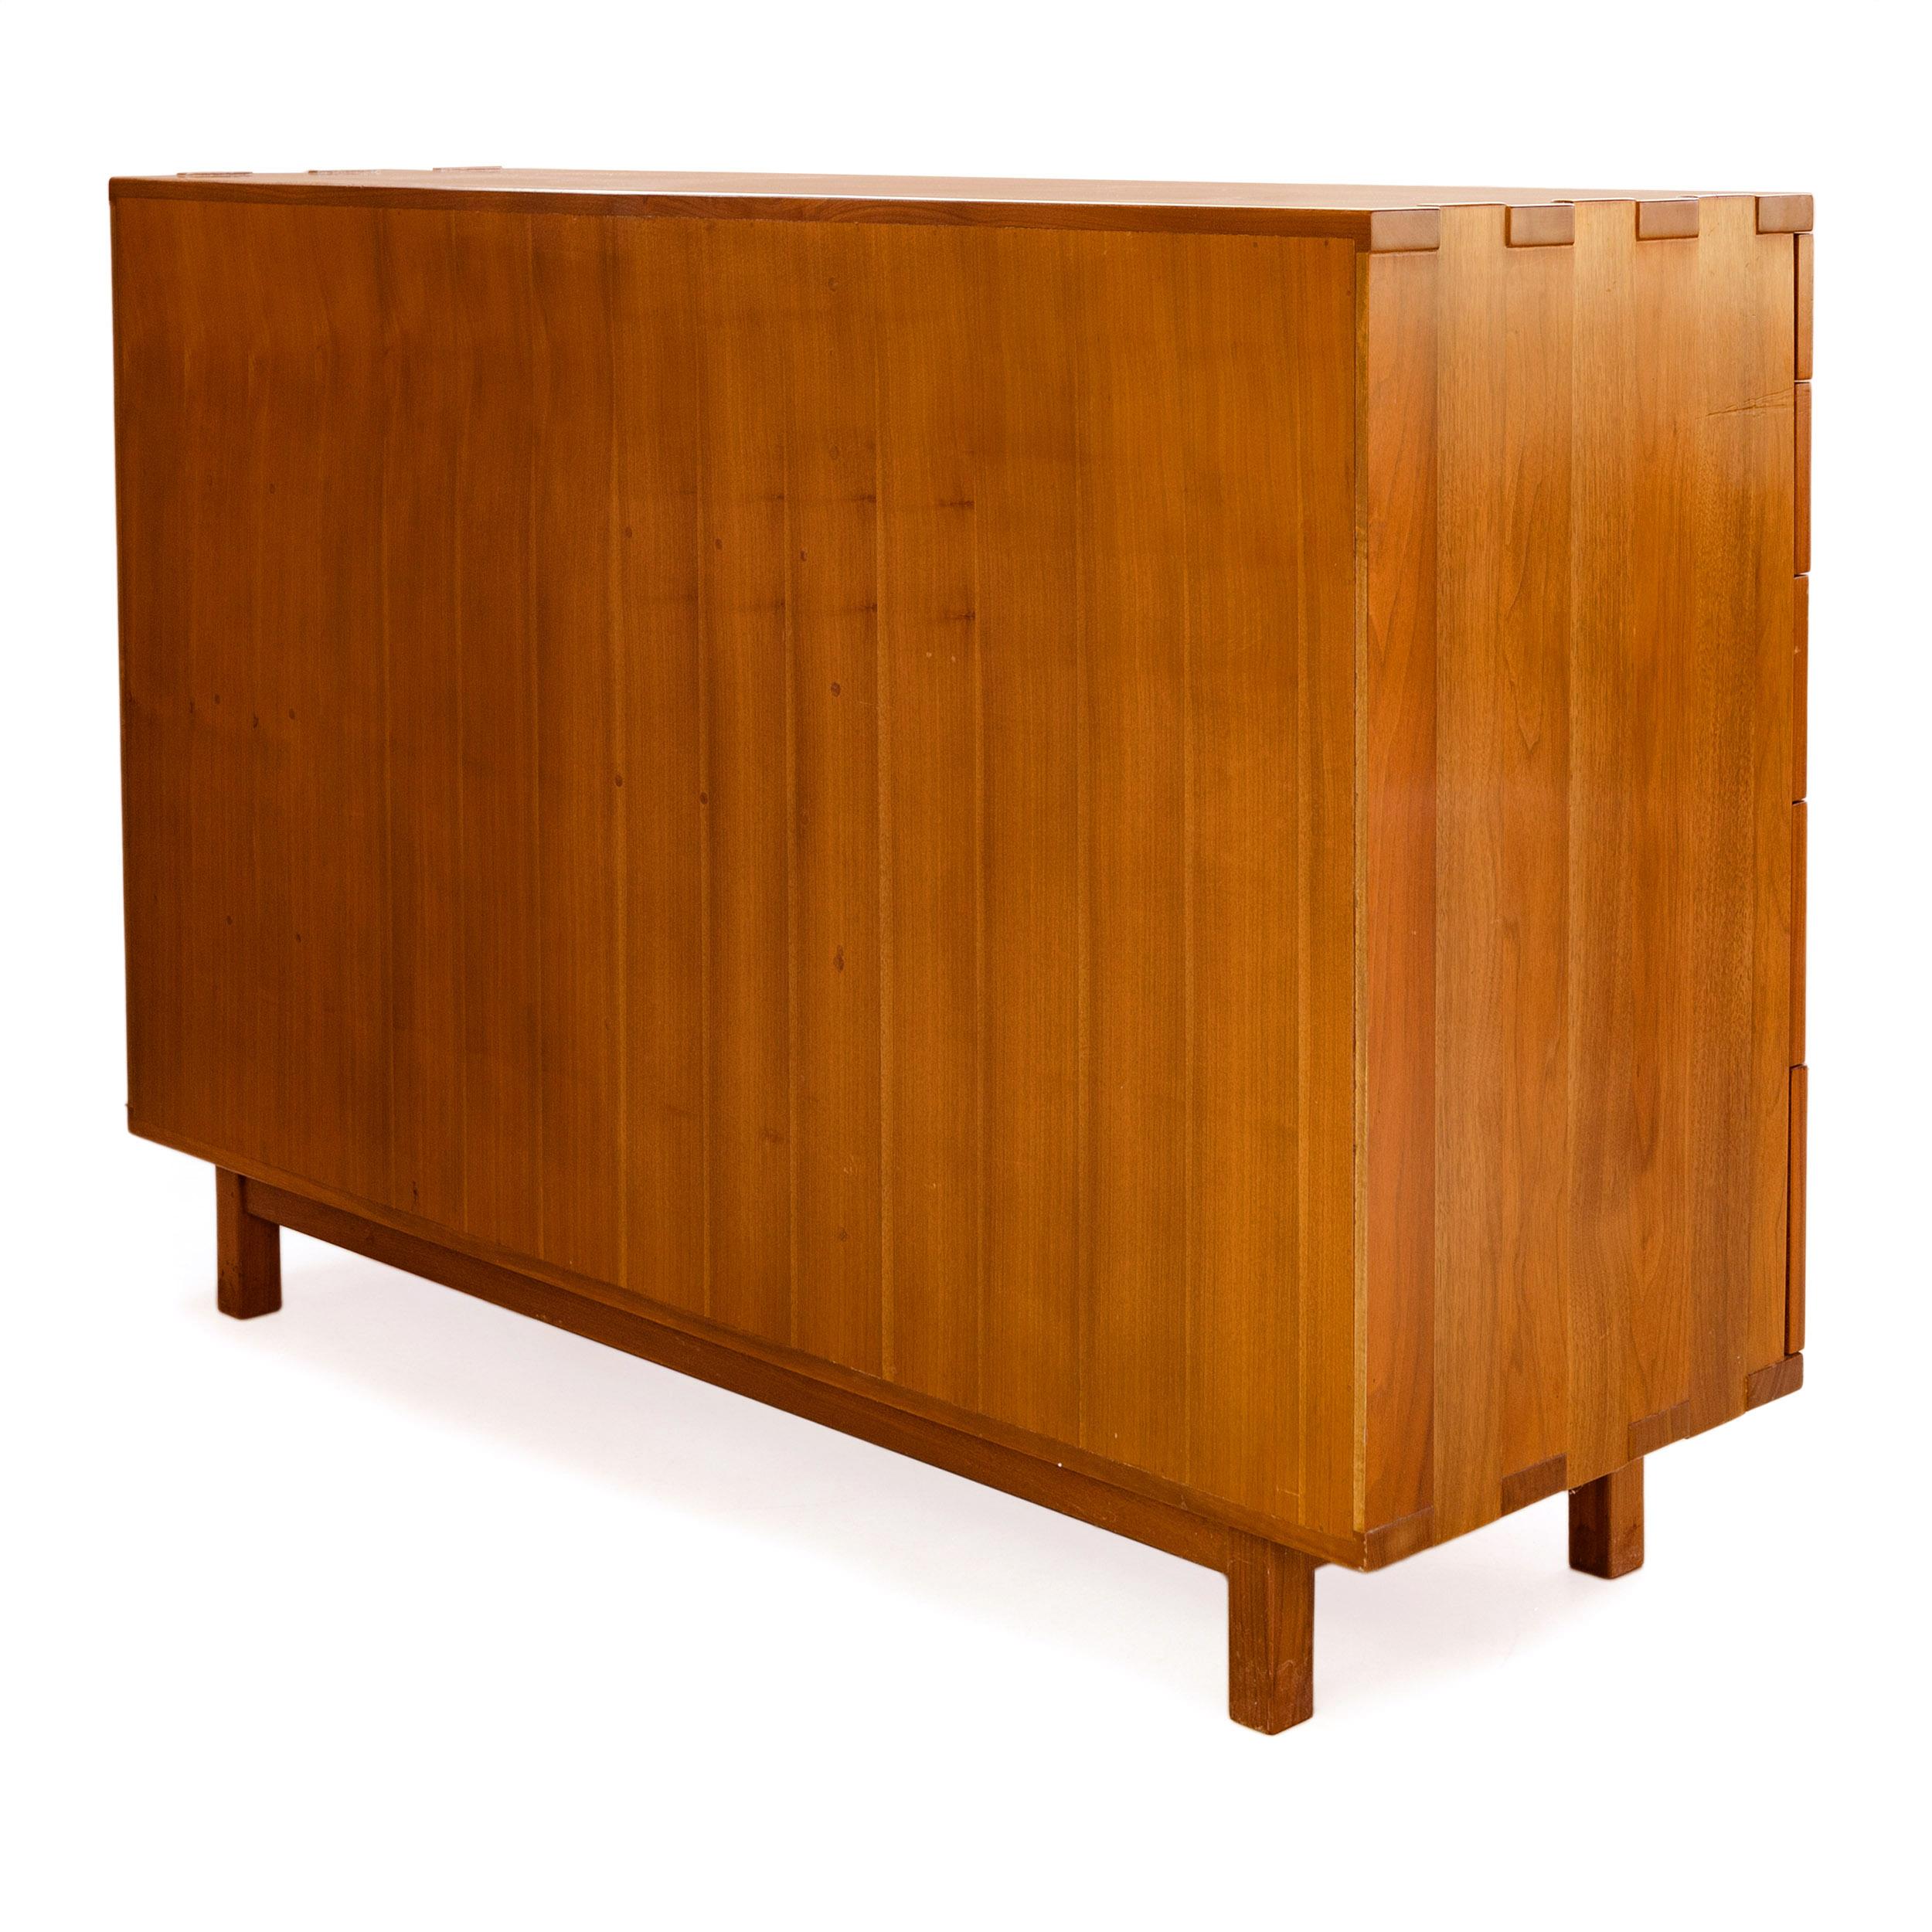 Mid-20th Century 1950s Solid Walnut Dresser by Edward Wormley for Dunbar For Sale